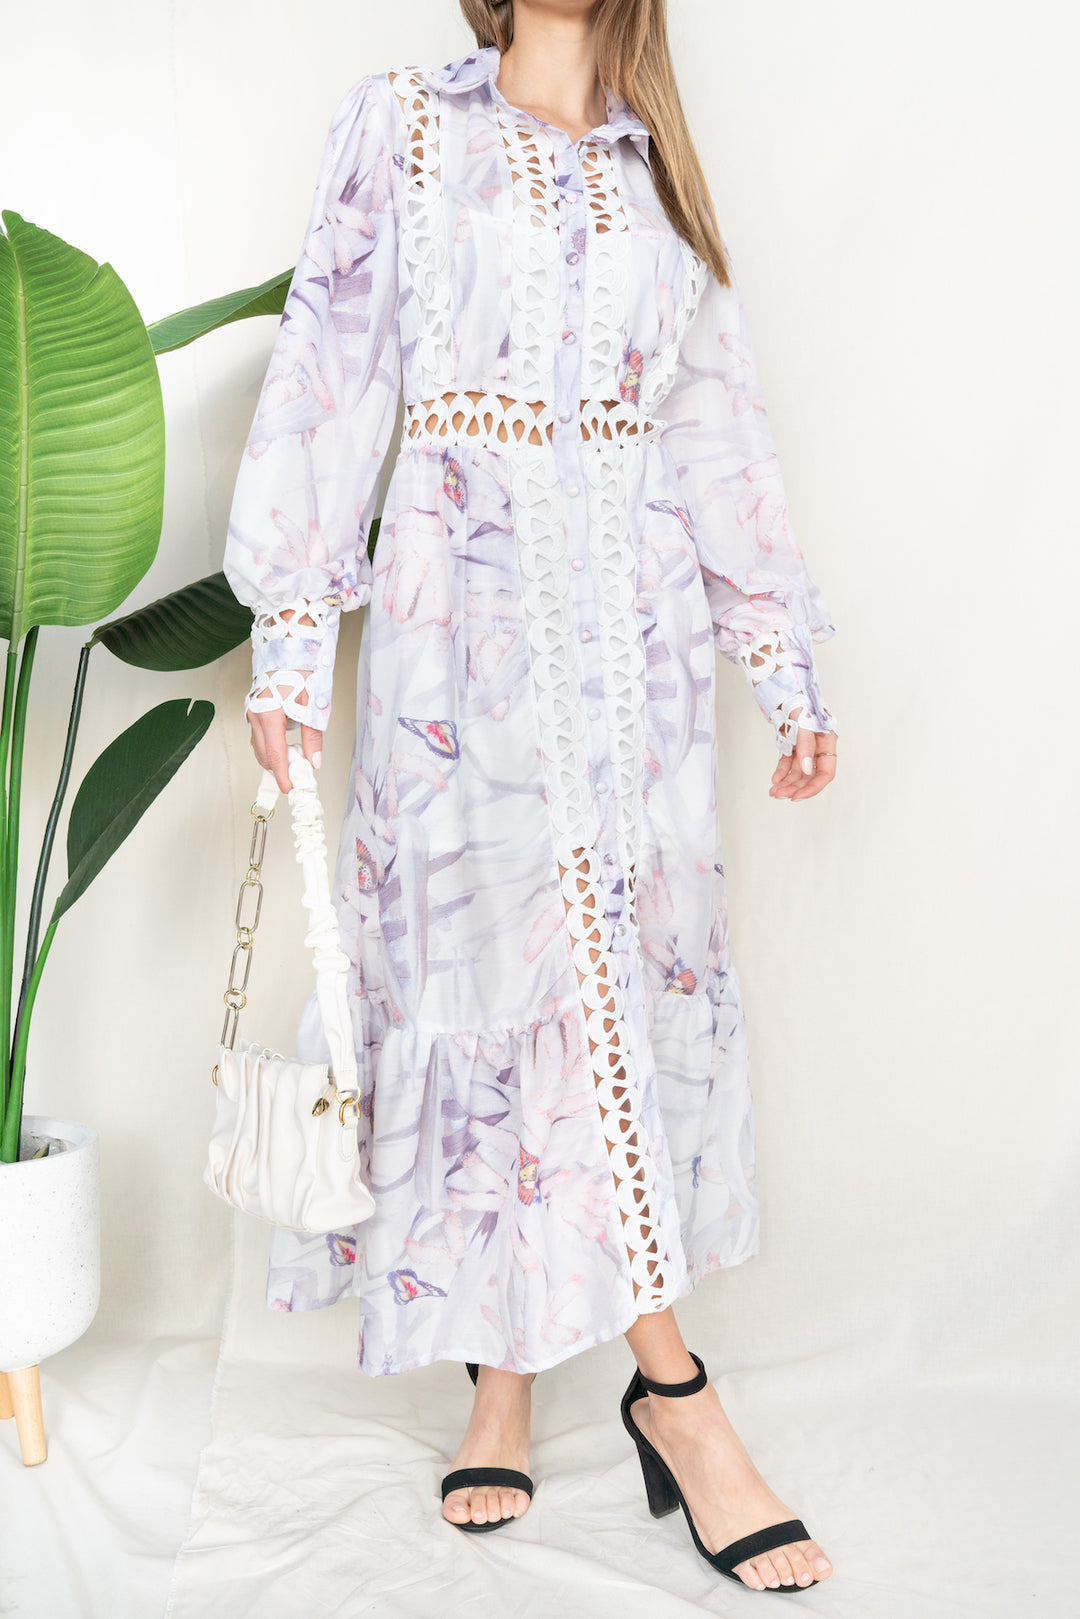 Capri Soft Floral Printed Lace Mix Dress